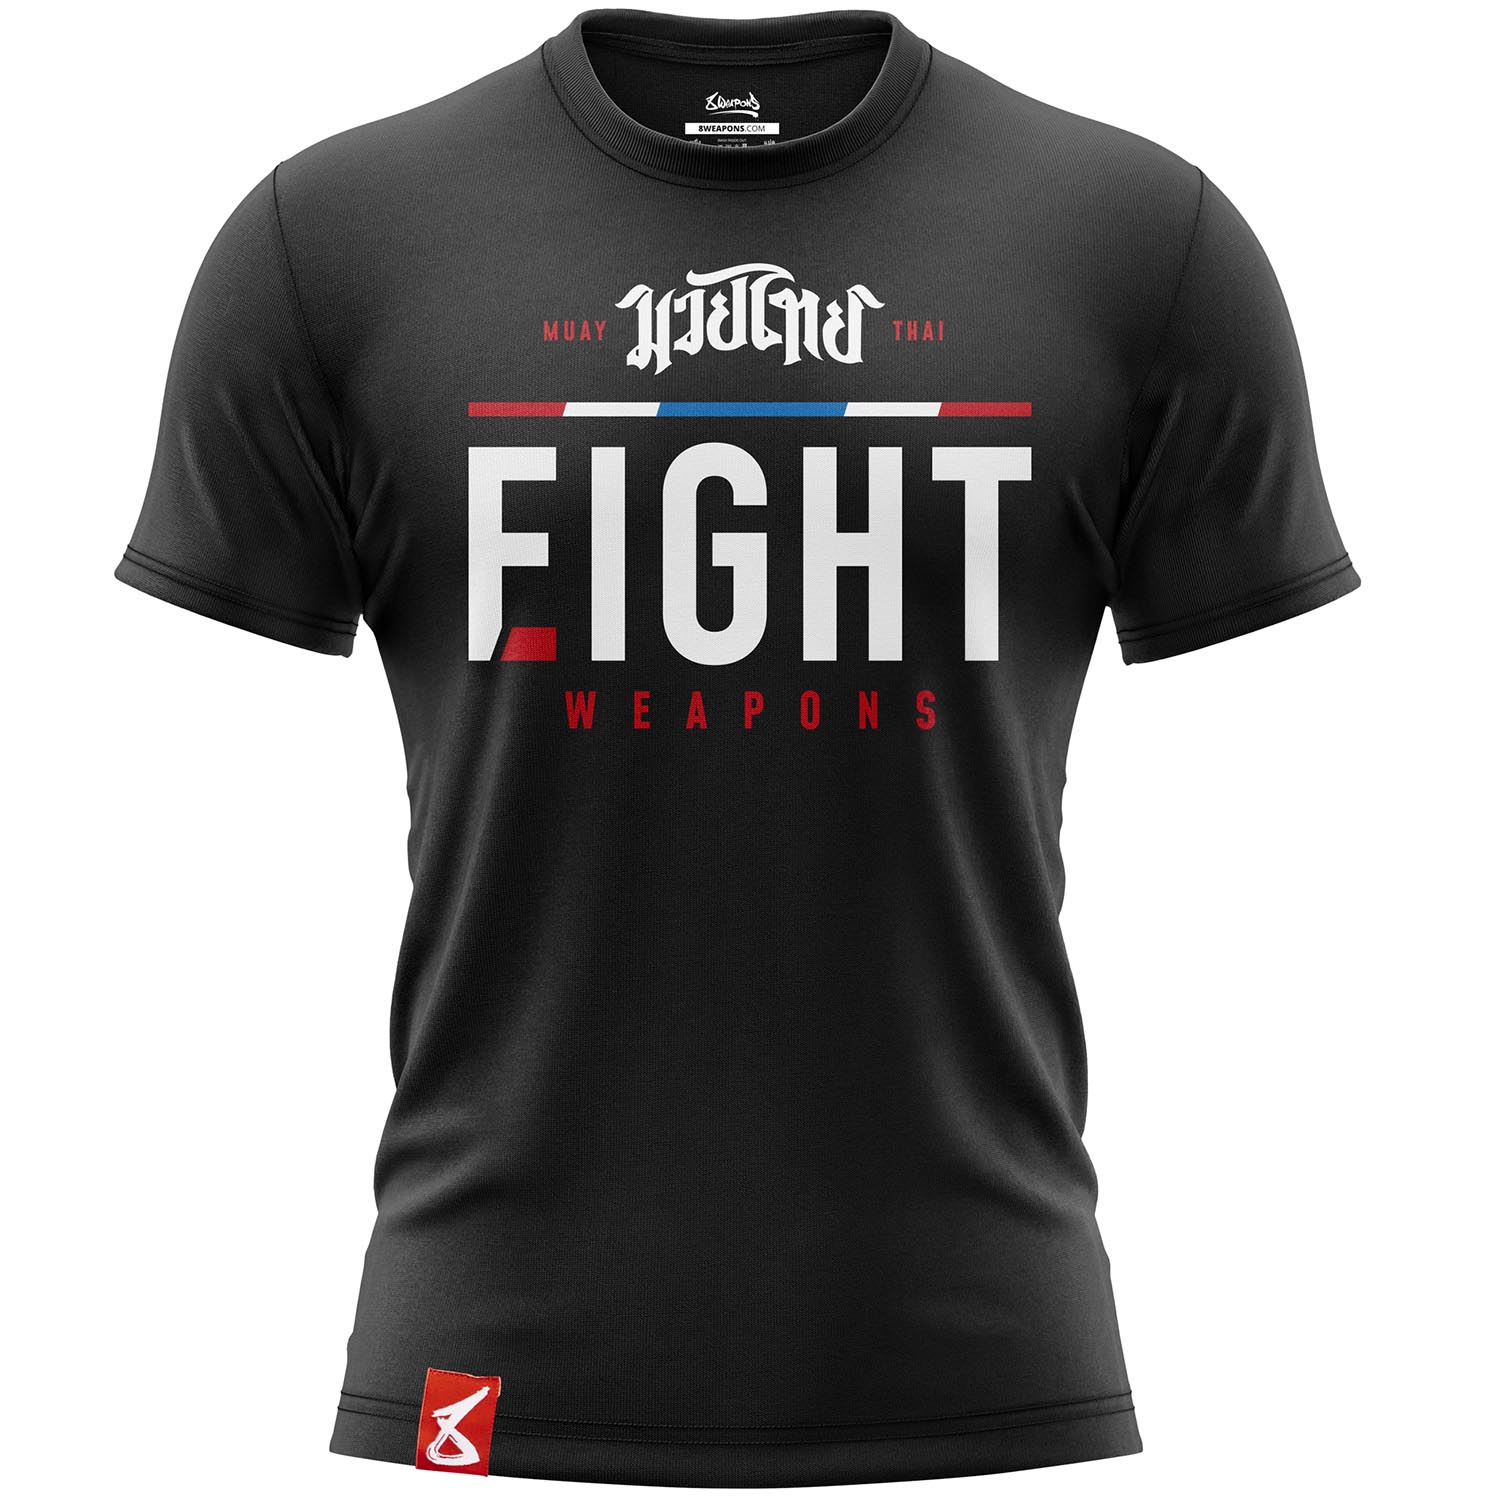 8 WEAPONS Muay Thai T-Shirt, The Fight, black, XXL